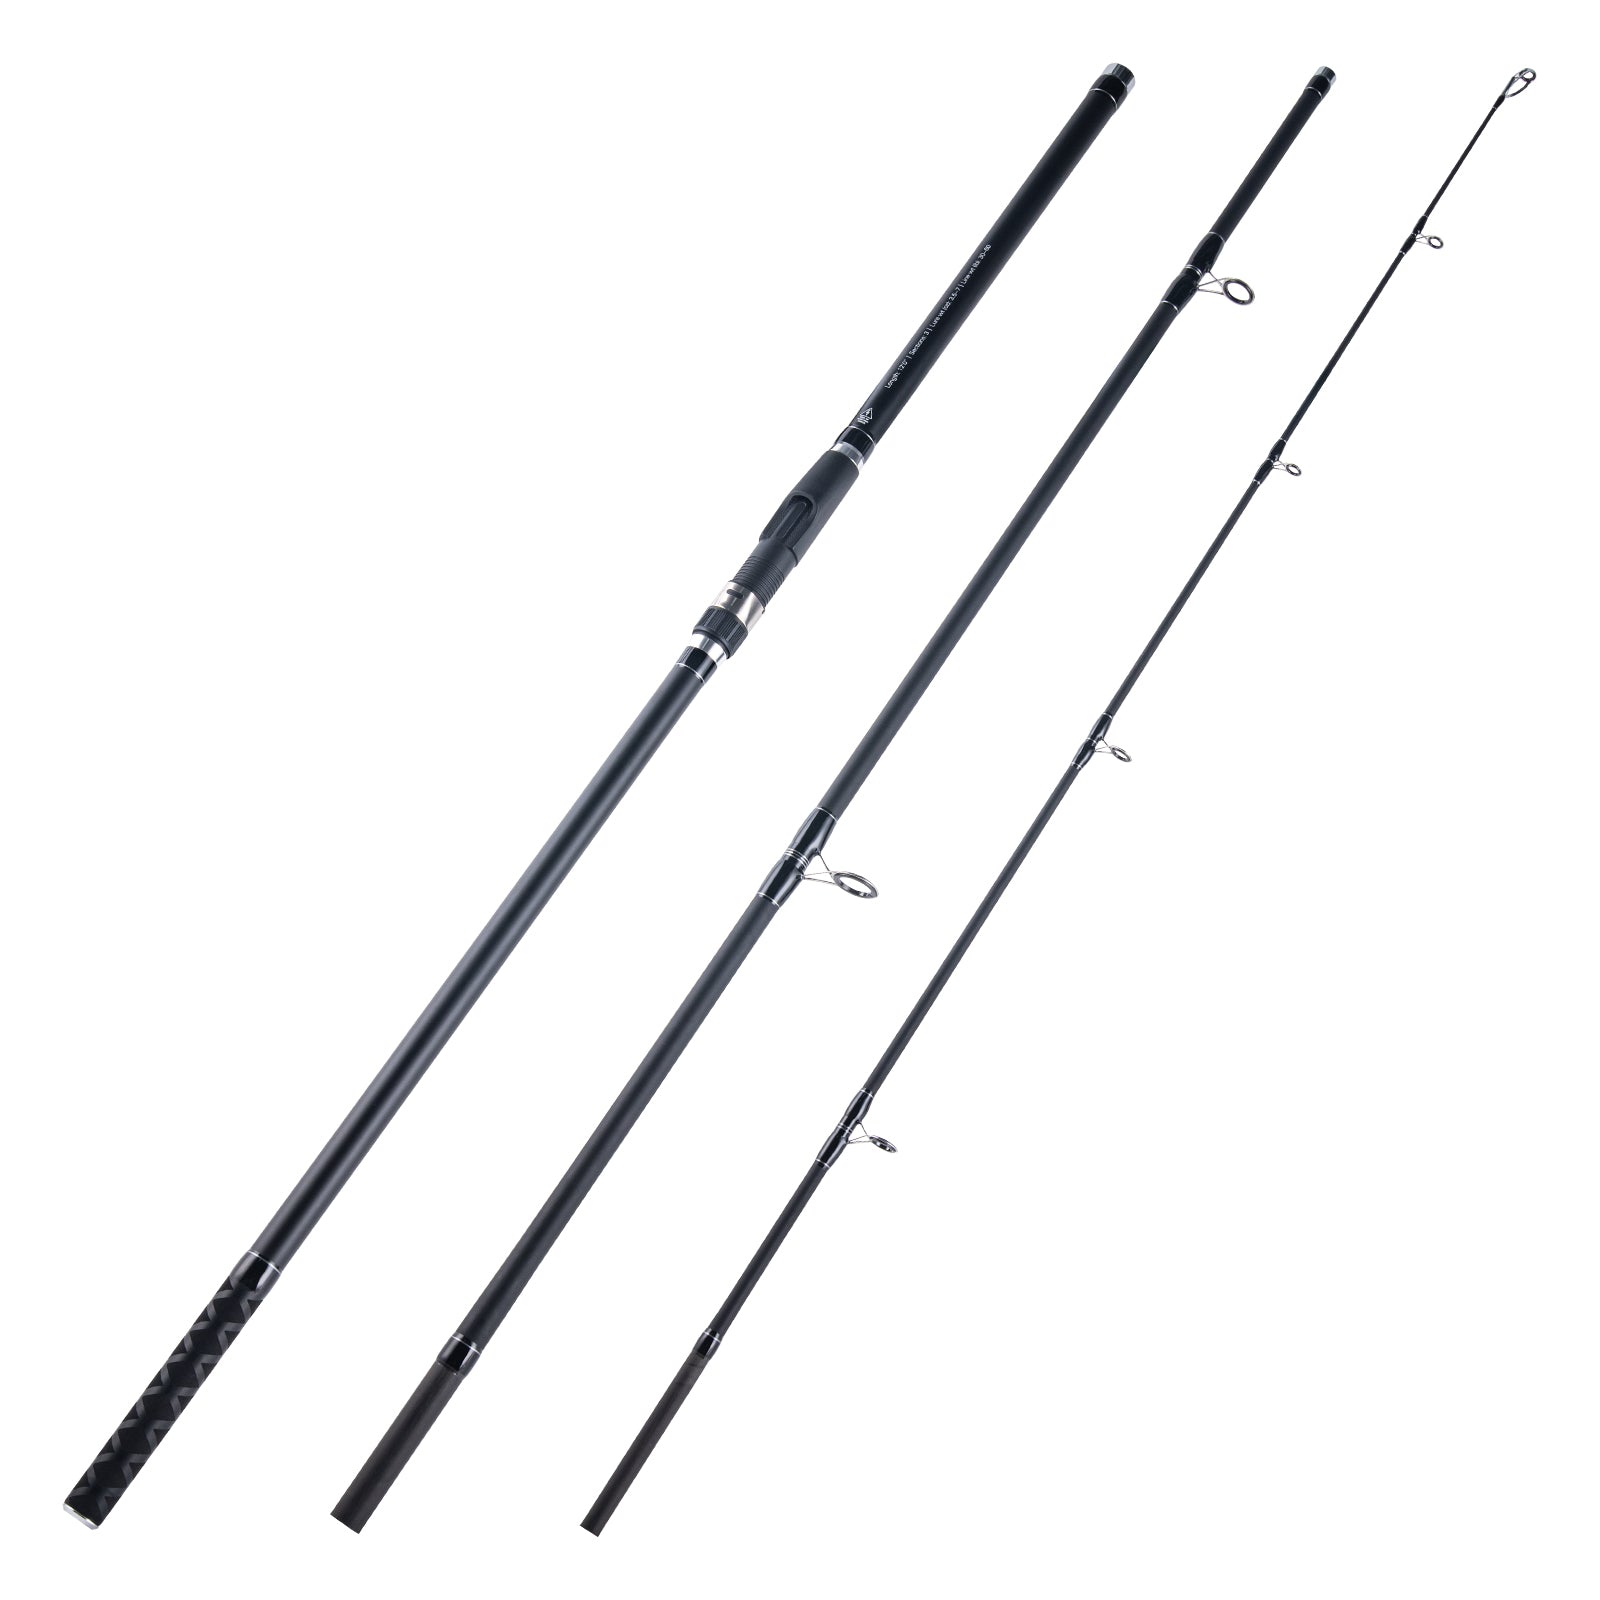 Travel Fishing Rod Casting Spinning Rods Ultralight Carbon Fiber